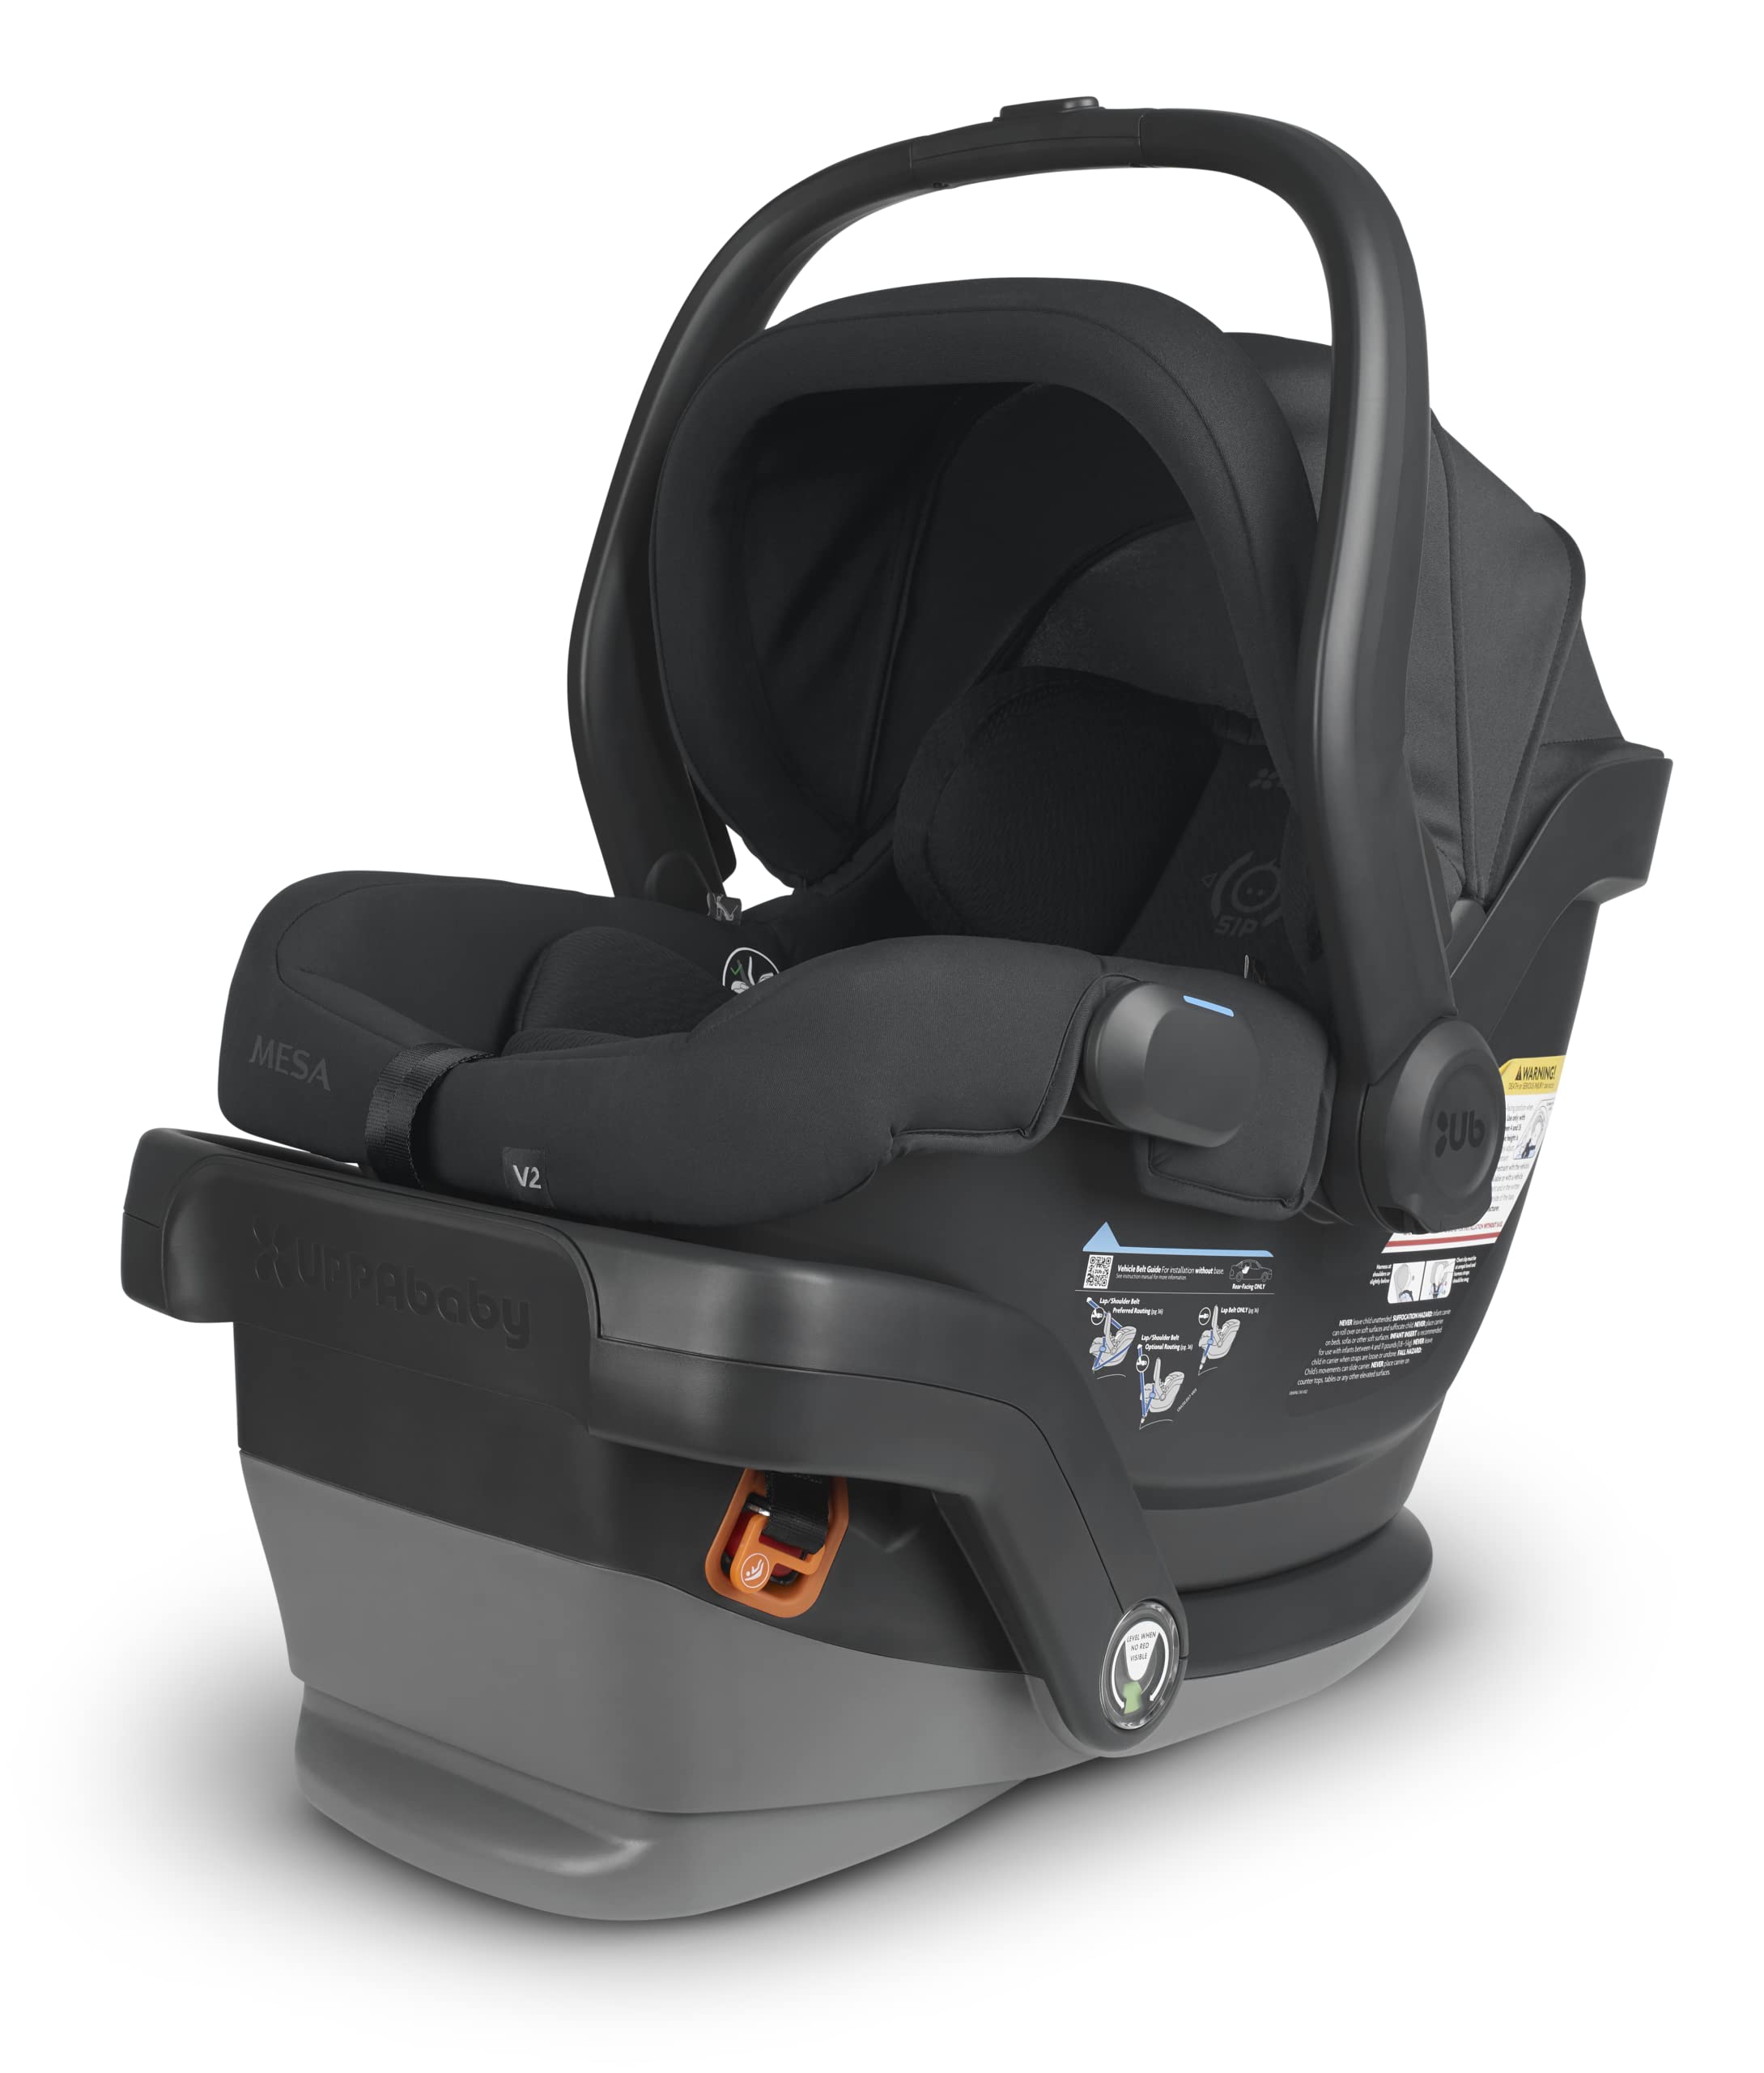 MESA V2 Infant Car Seat- Jake (Charcoal) + Base for MESA/MESA V2